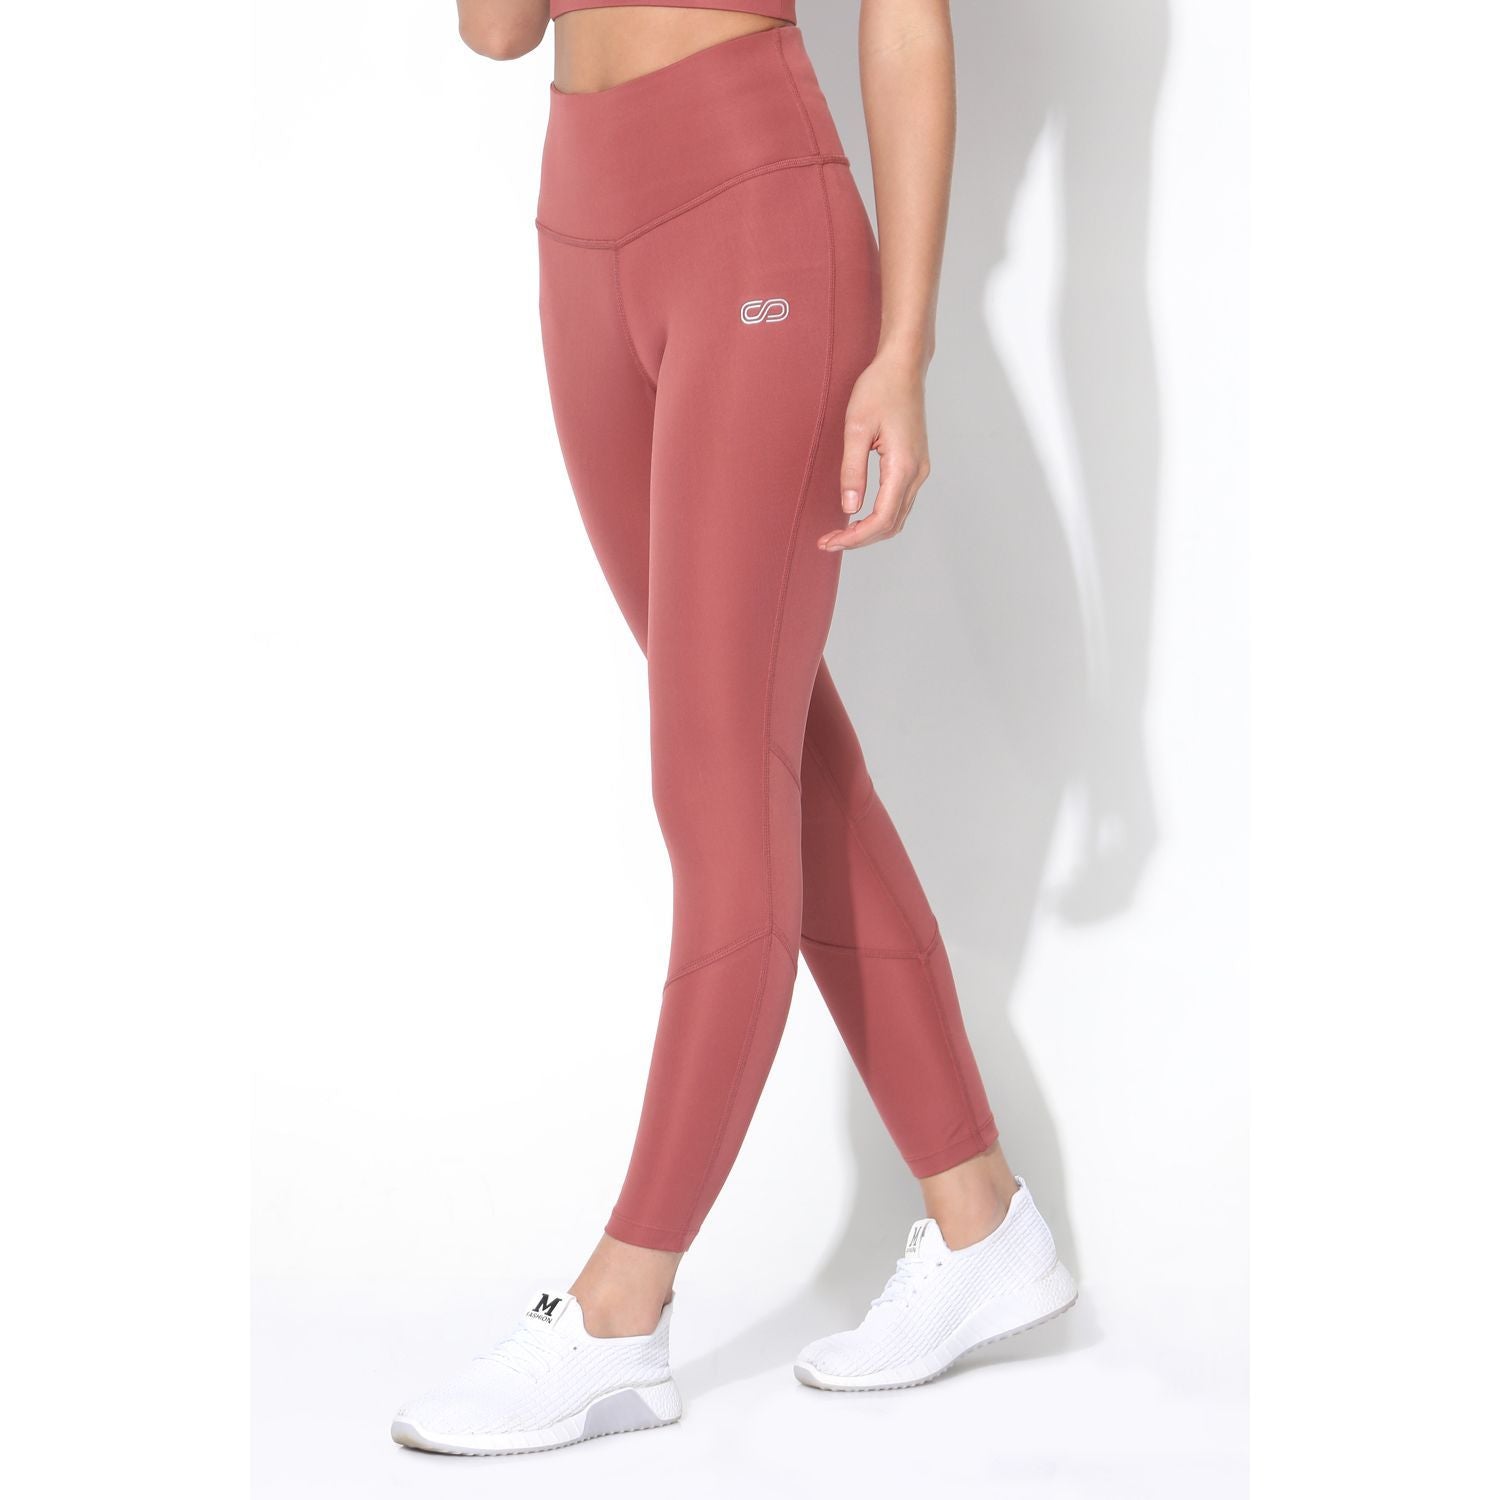 Zilpin 7/8 Leggings - Chandra Yoga & Active Wear